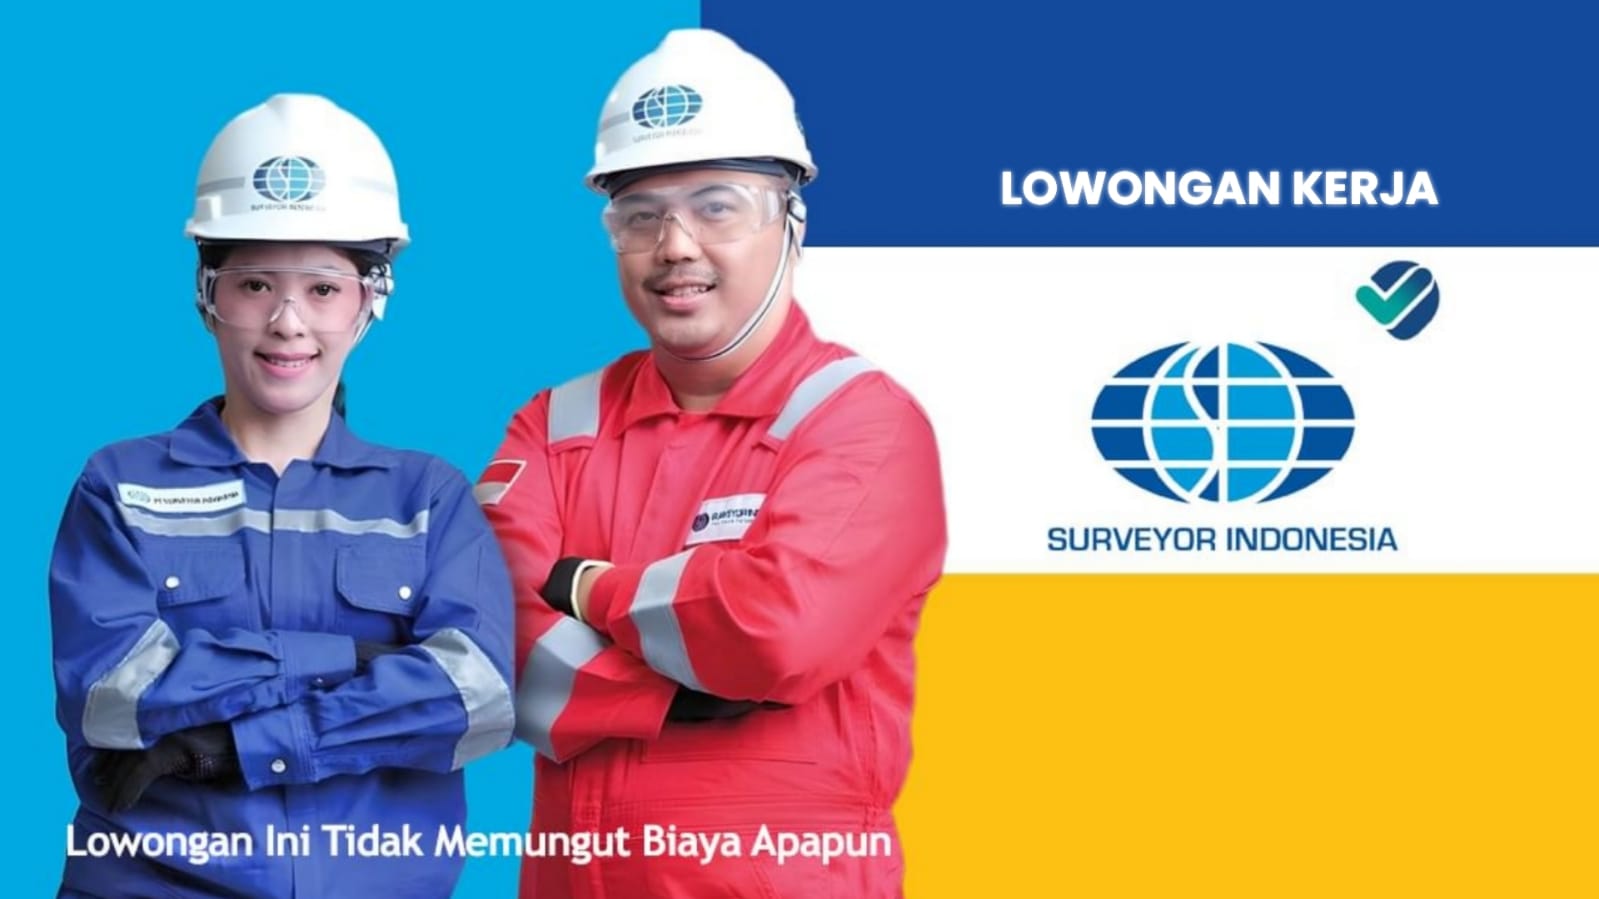 Lowongan Kerja BUMN Terbaru PT Surveyor Indonesia Lulusan SMA SMK Sederajat, Batas Usia 45 Tahun